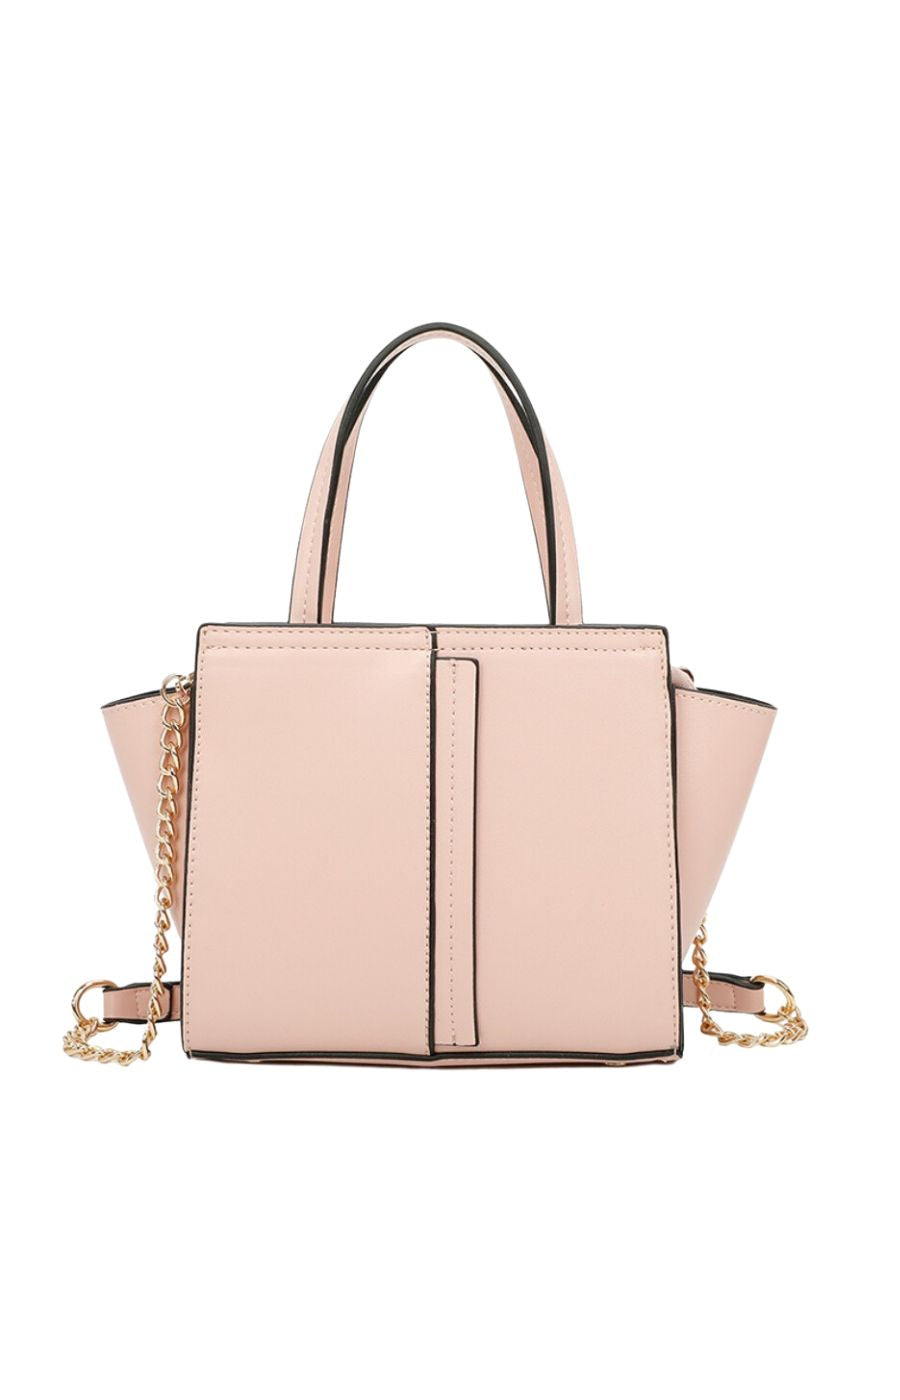 Sienna Mini Handbag in Rose